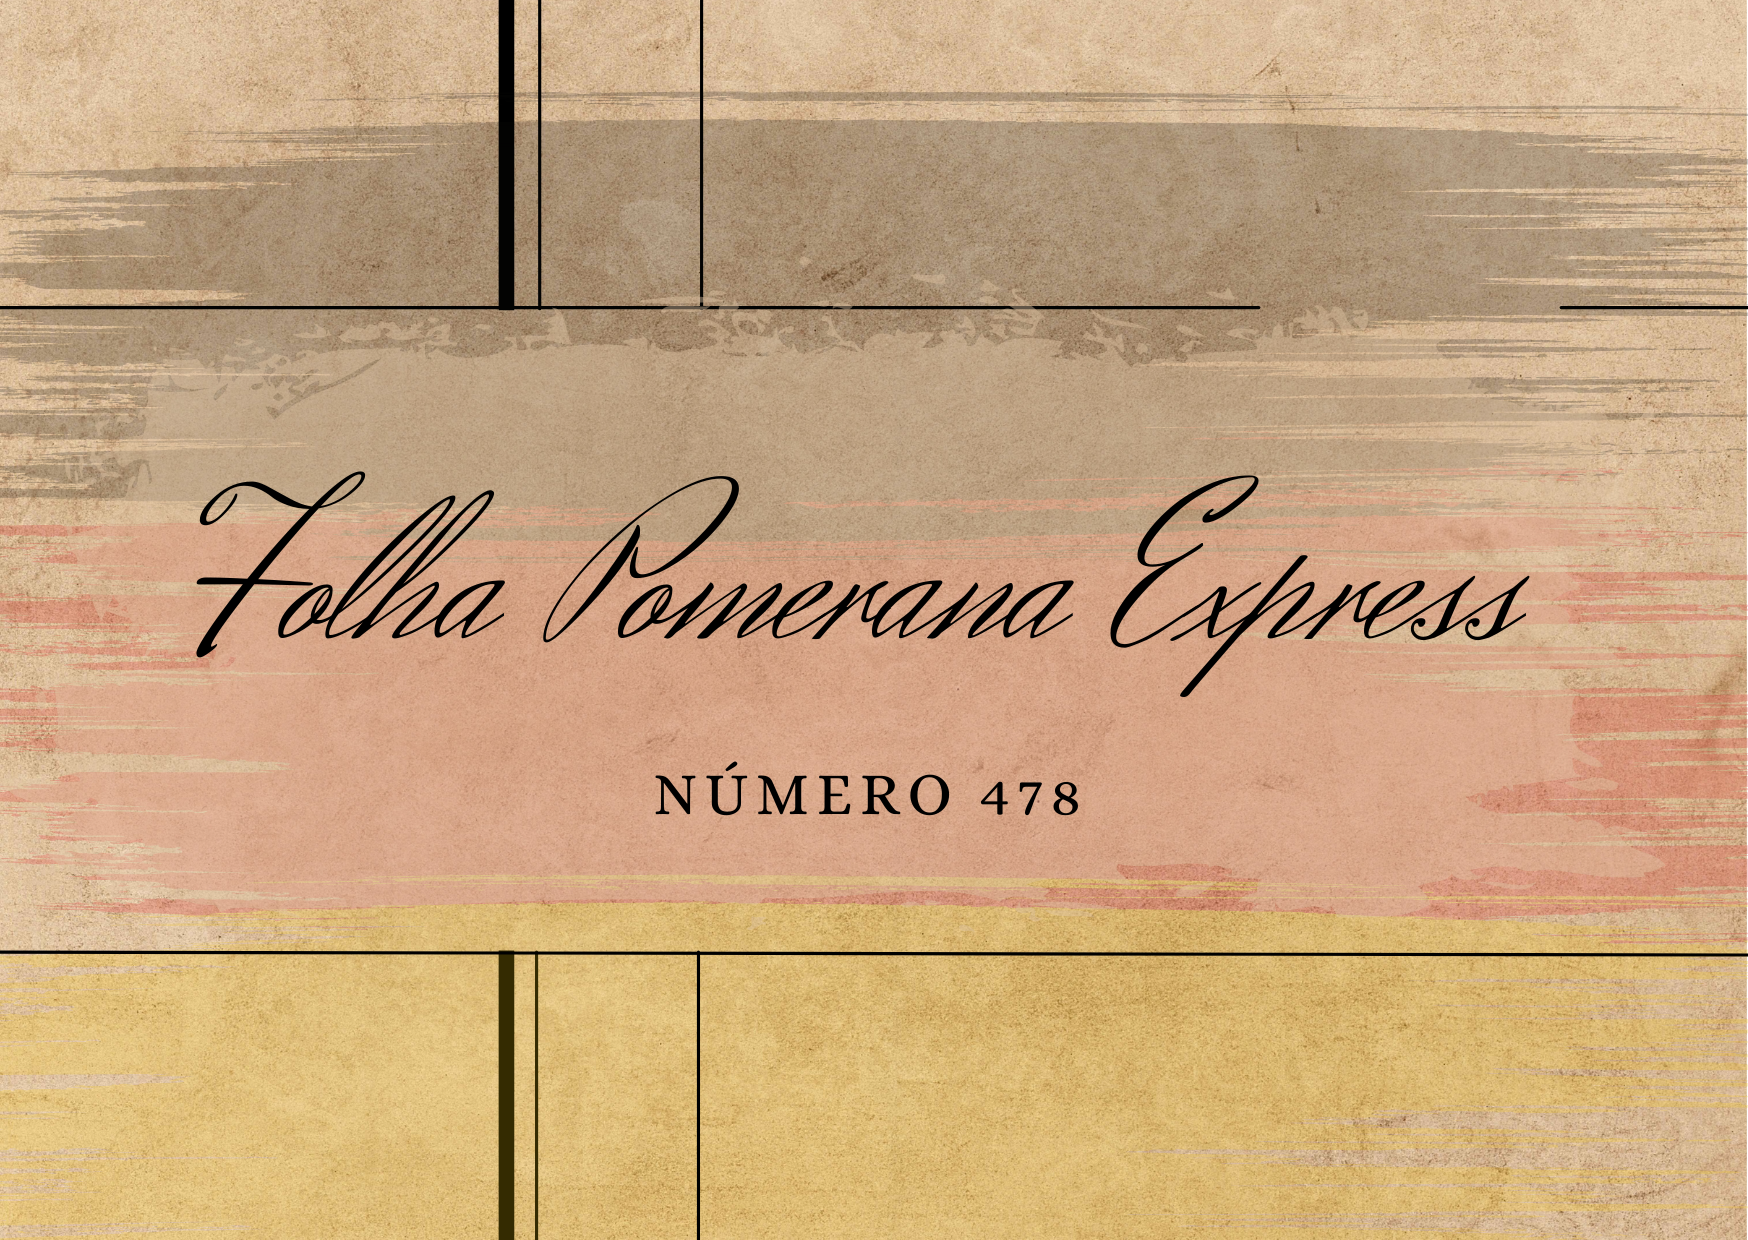 Folha Pomerana Express nº 478 – Ivan Seibel – Informativo